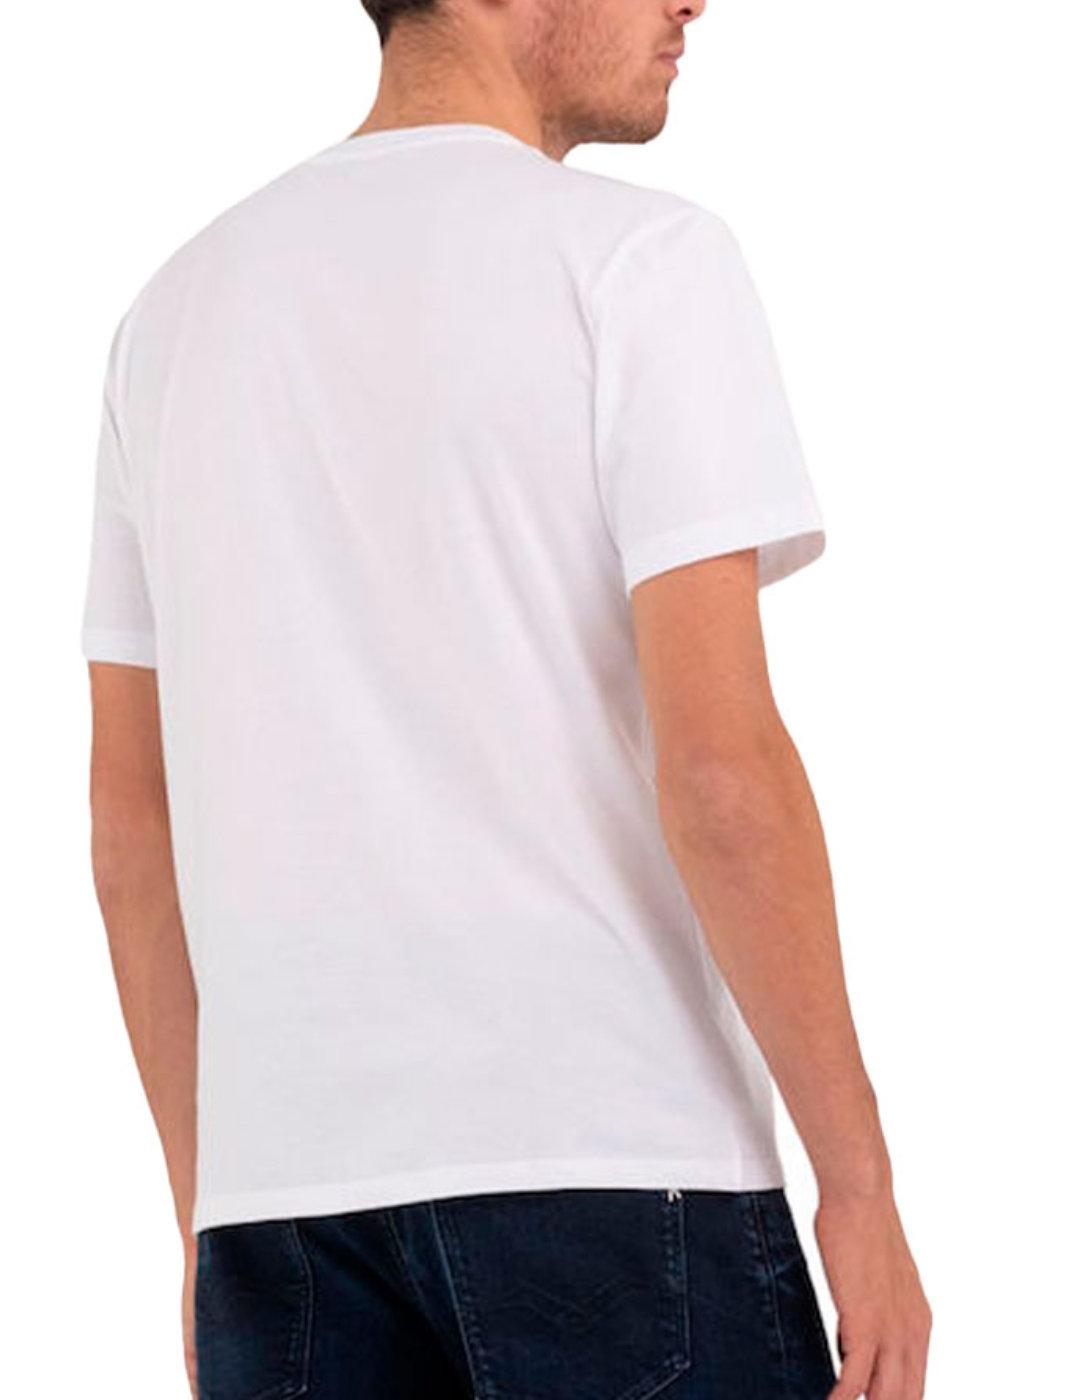 Camiseta Replay blanca logo rojo manga corta para hombre